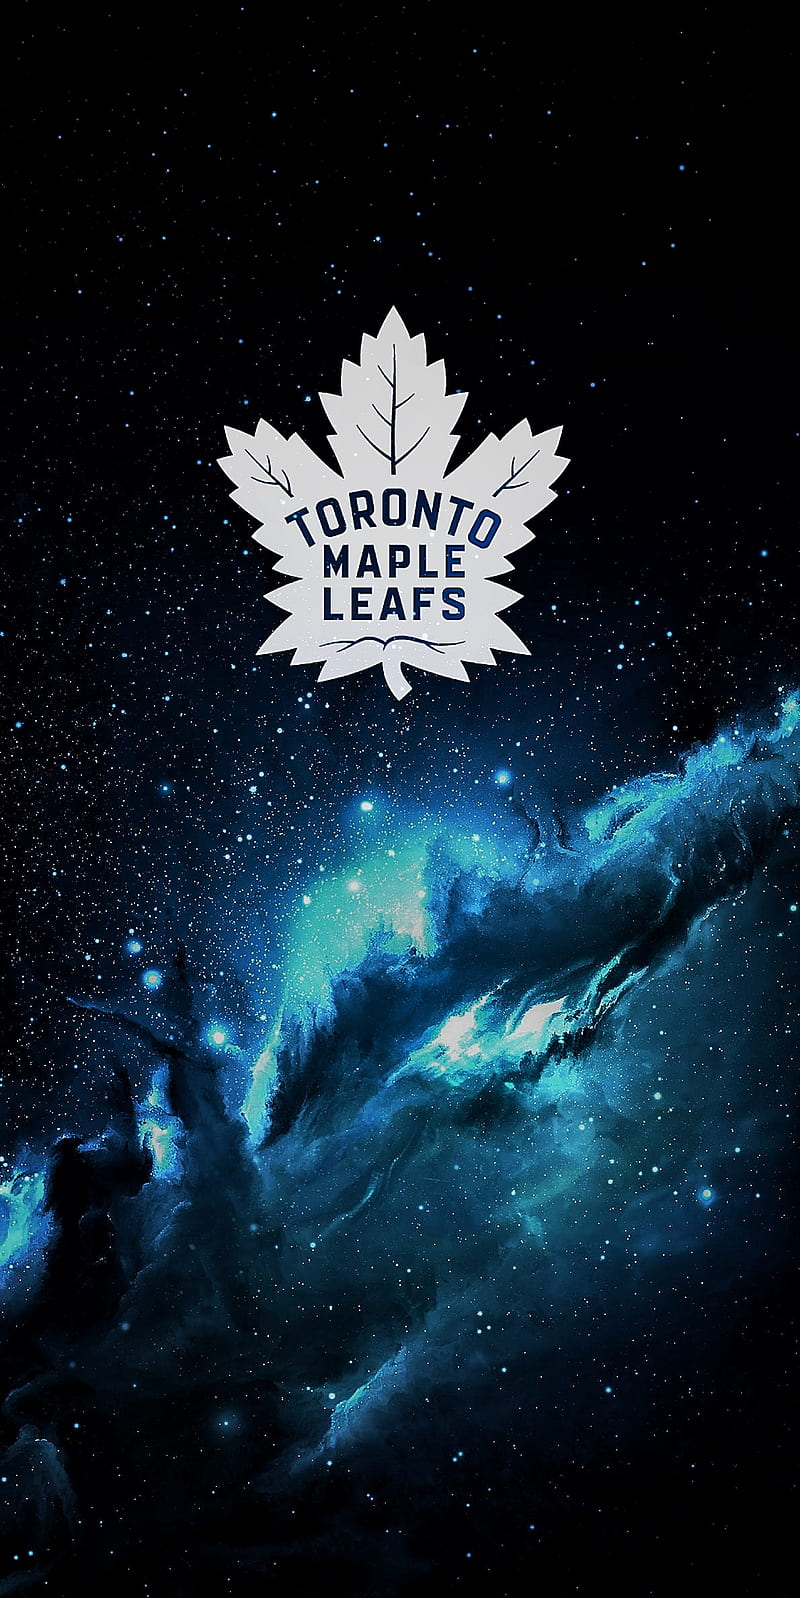 Toronto Maple Leafs | Toronto, Ontario | Instagram photos and videos